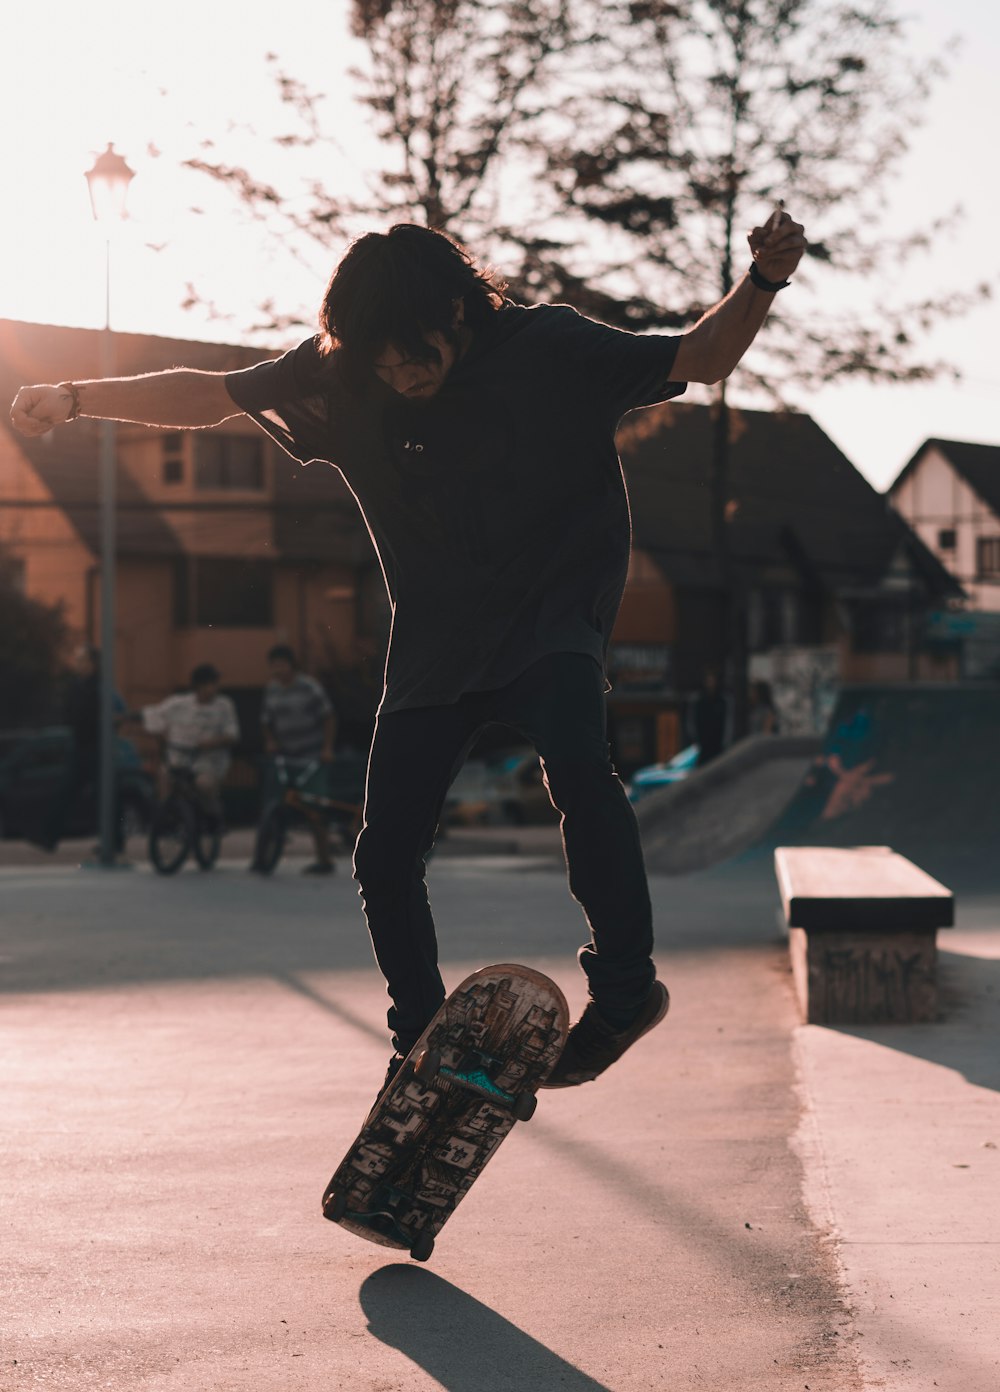 man in black performs trick on skateboard